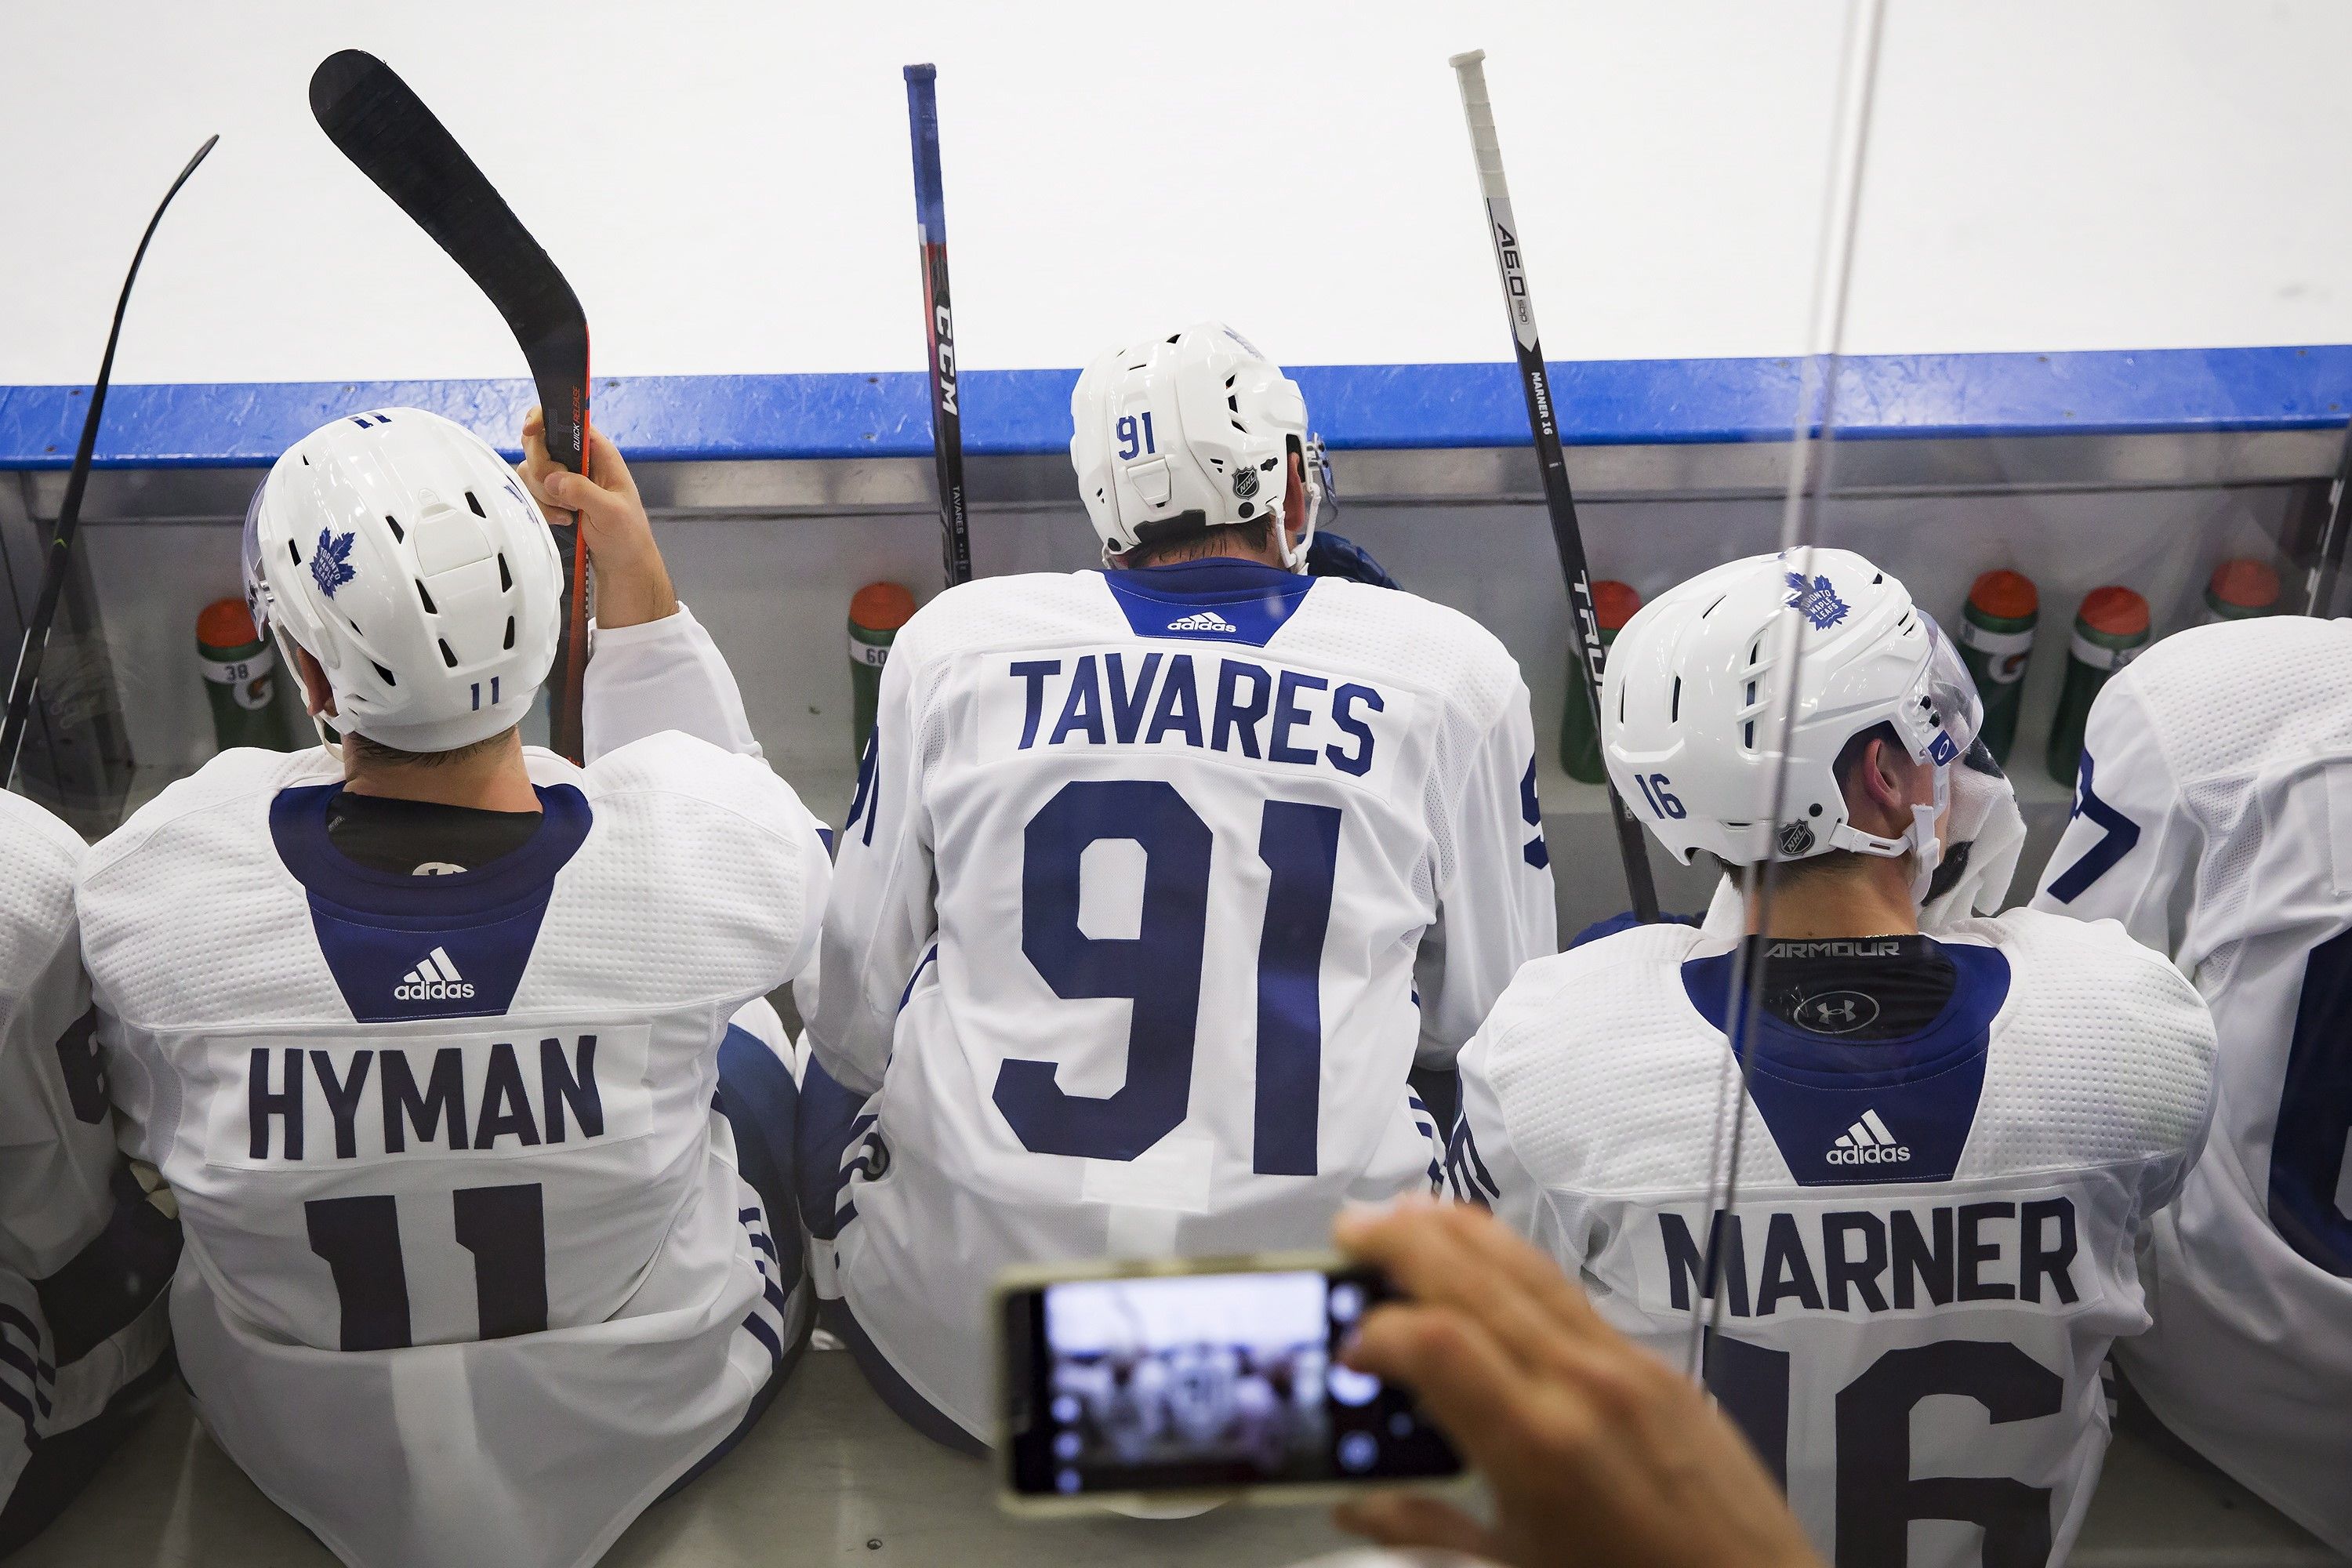 New Blue Adidas Toronto Maple Leafs Player Tee's Matthews & Marner